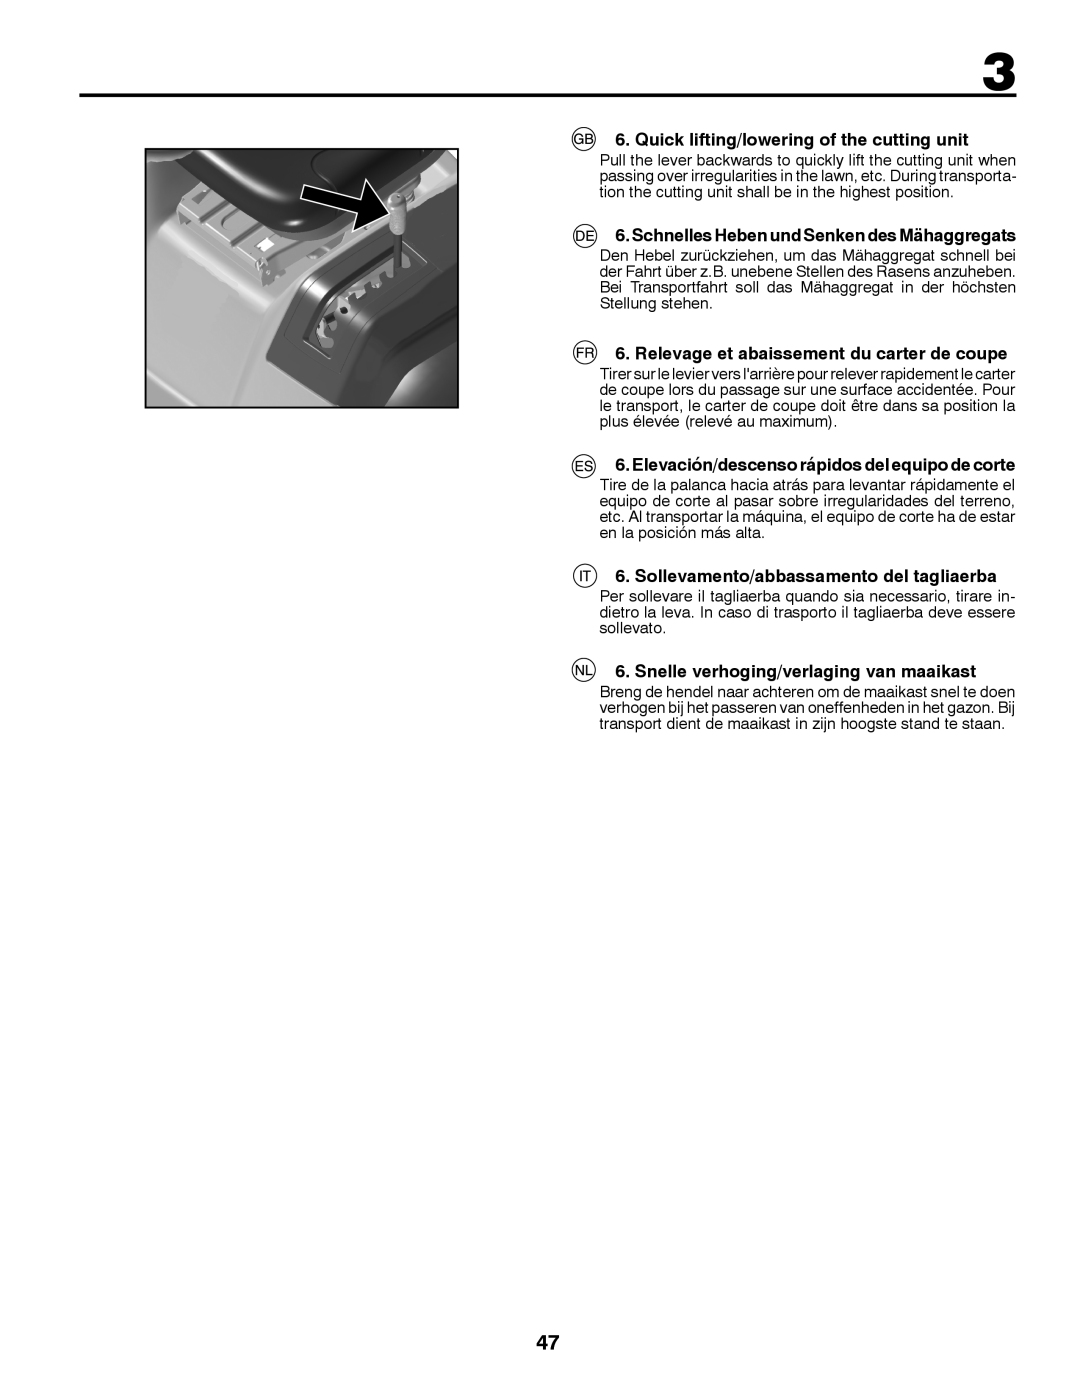 Jonsered LT2213C instruction manual Quick lifting/lowering of the cutting unit, Schnelles Heben und Senken des Mähaggregats 